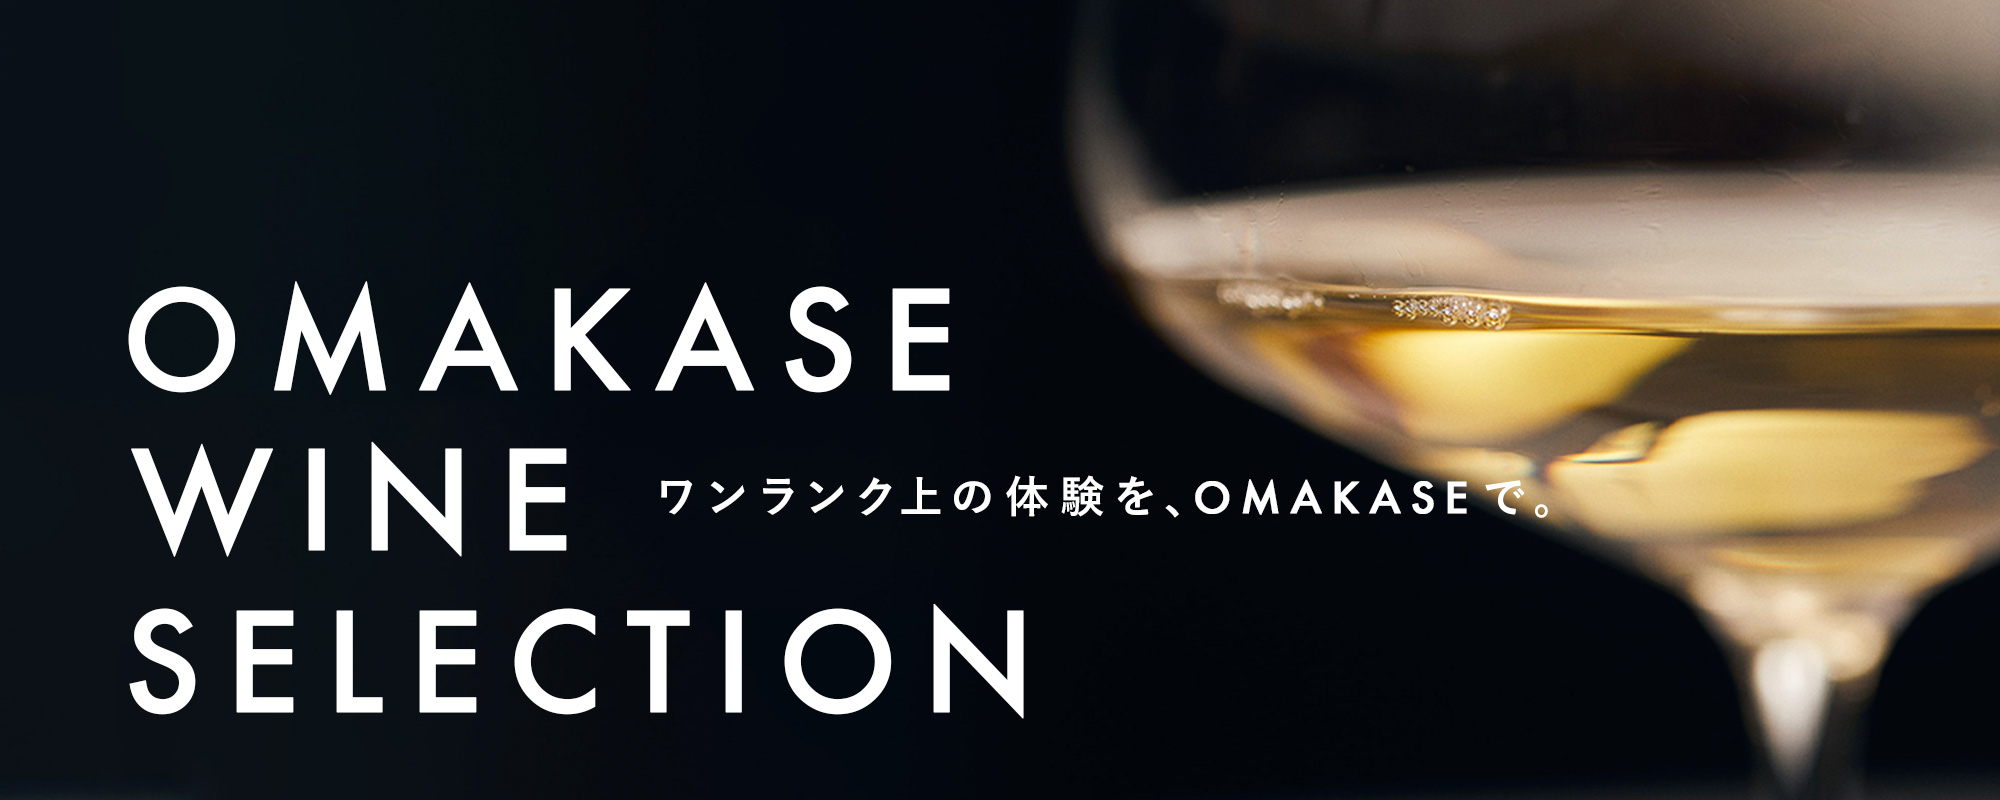 OMAKASE WINE SELECTION